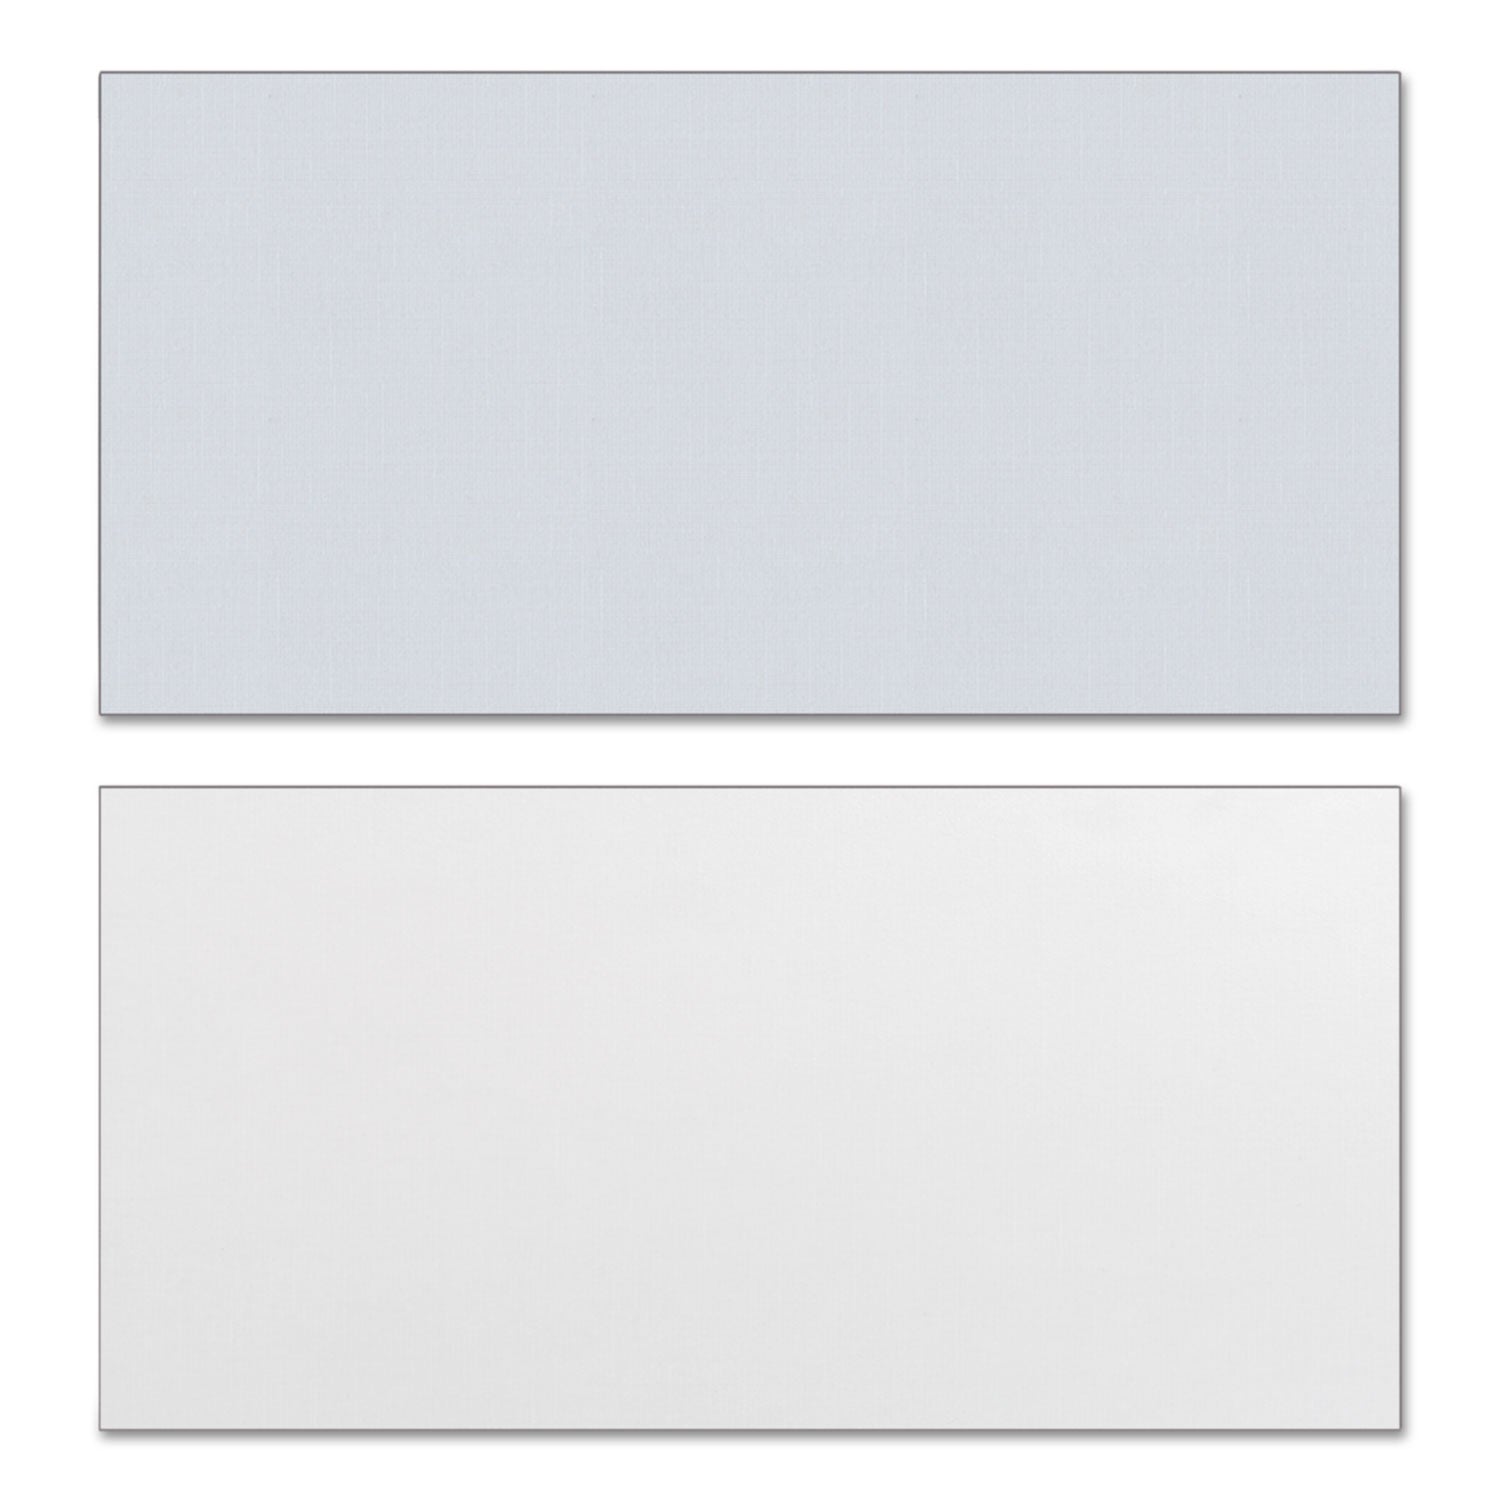 reversible-laminate-table-top-rectangular-4763w-x-2363d-white-gray_alett4824wg - 2